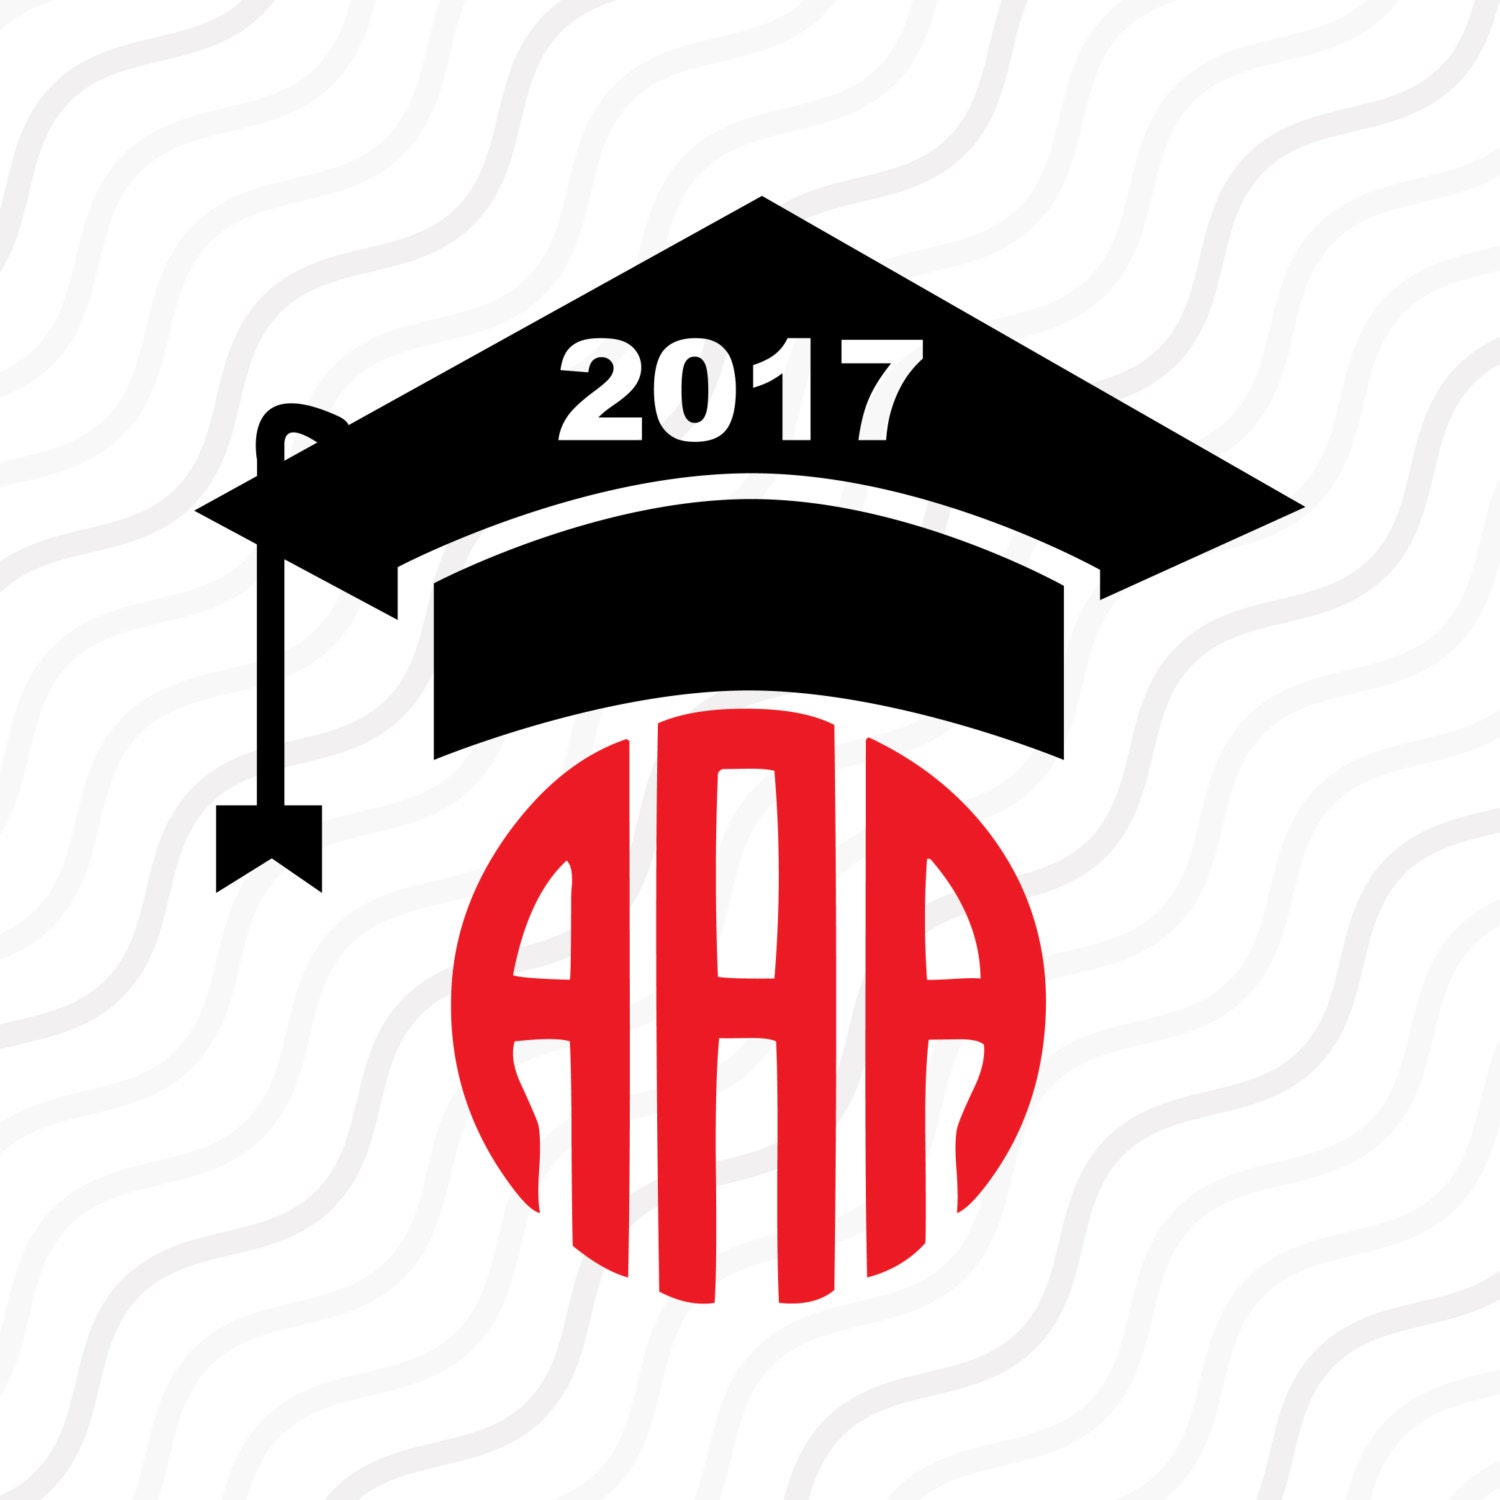 Download Graduation Cap SVG Graduation 2017 Monogram SVG Cut table